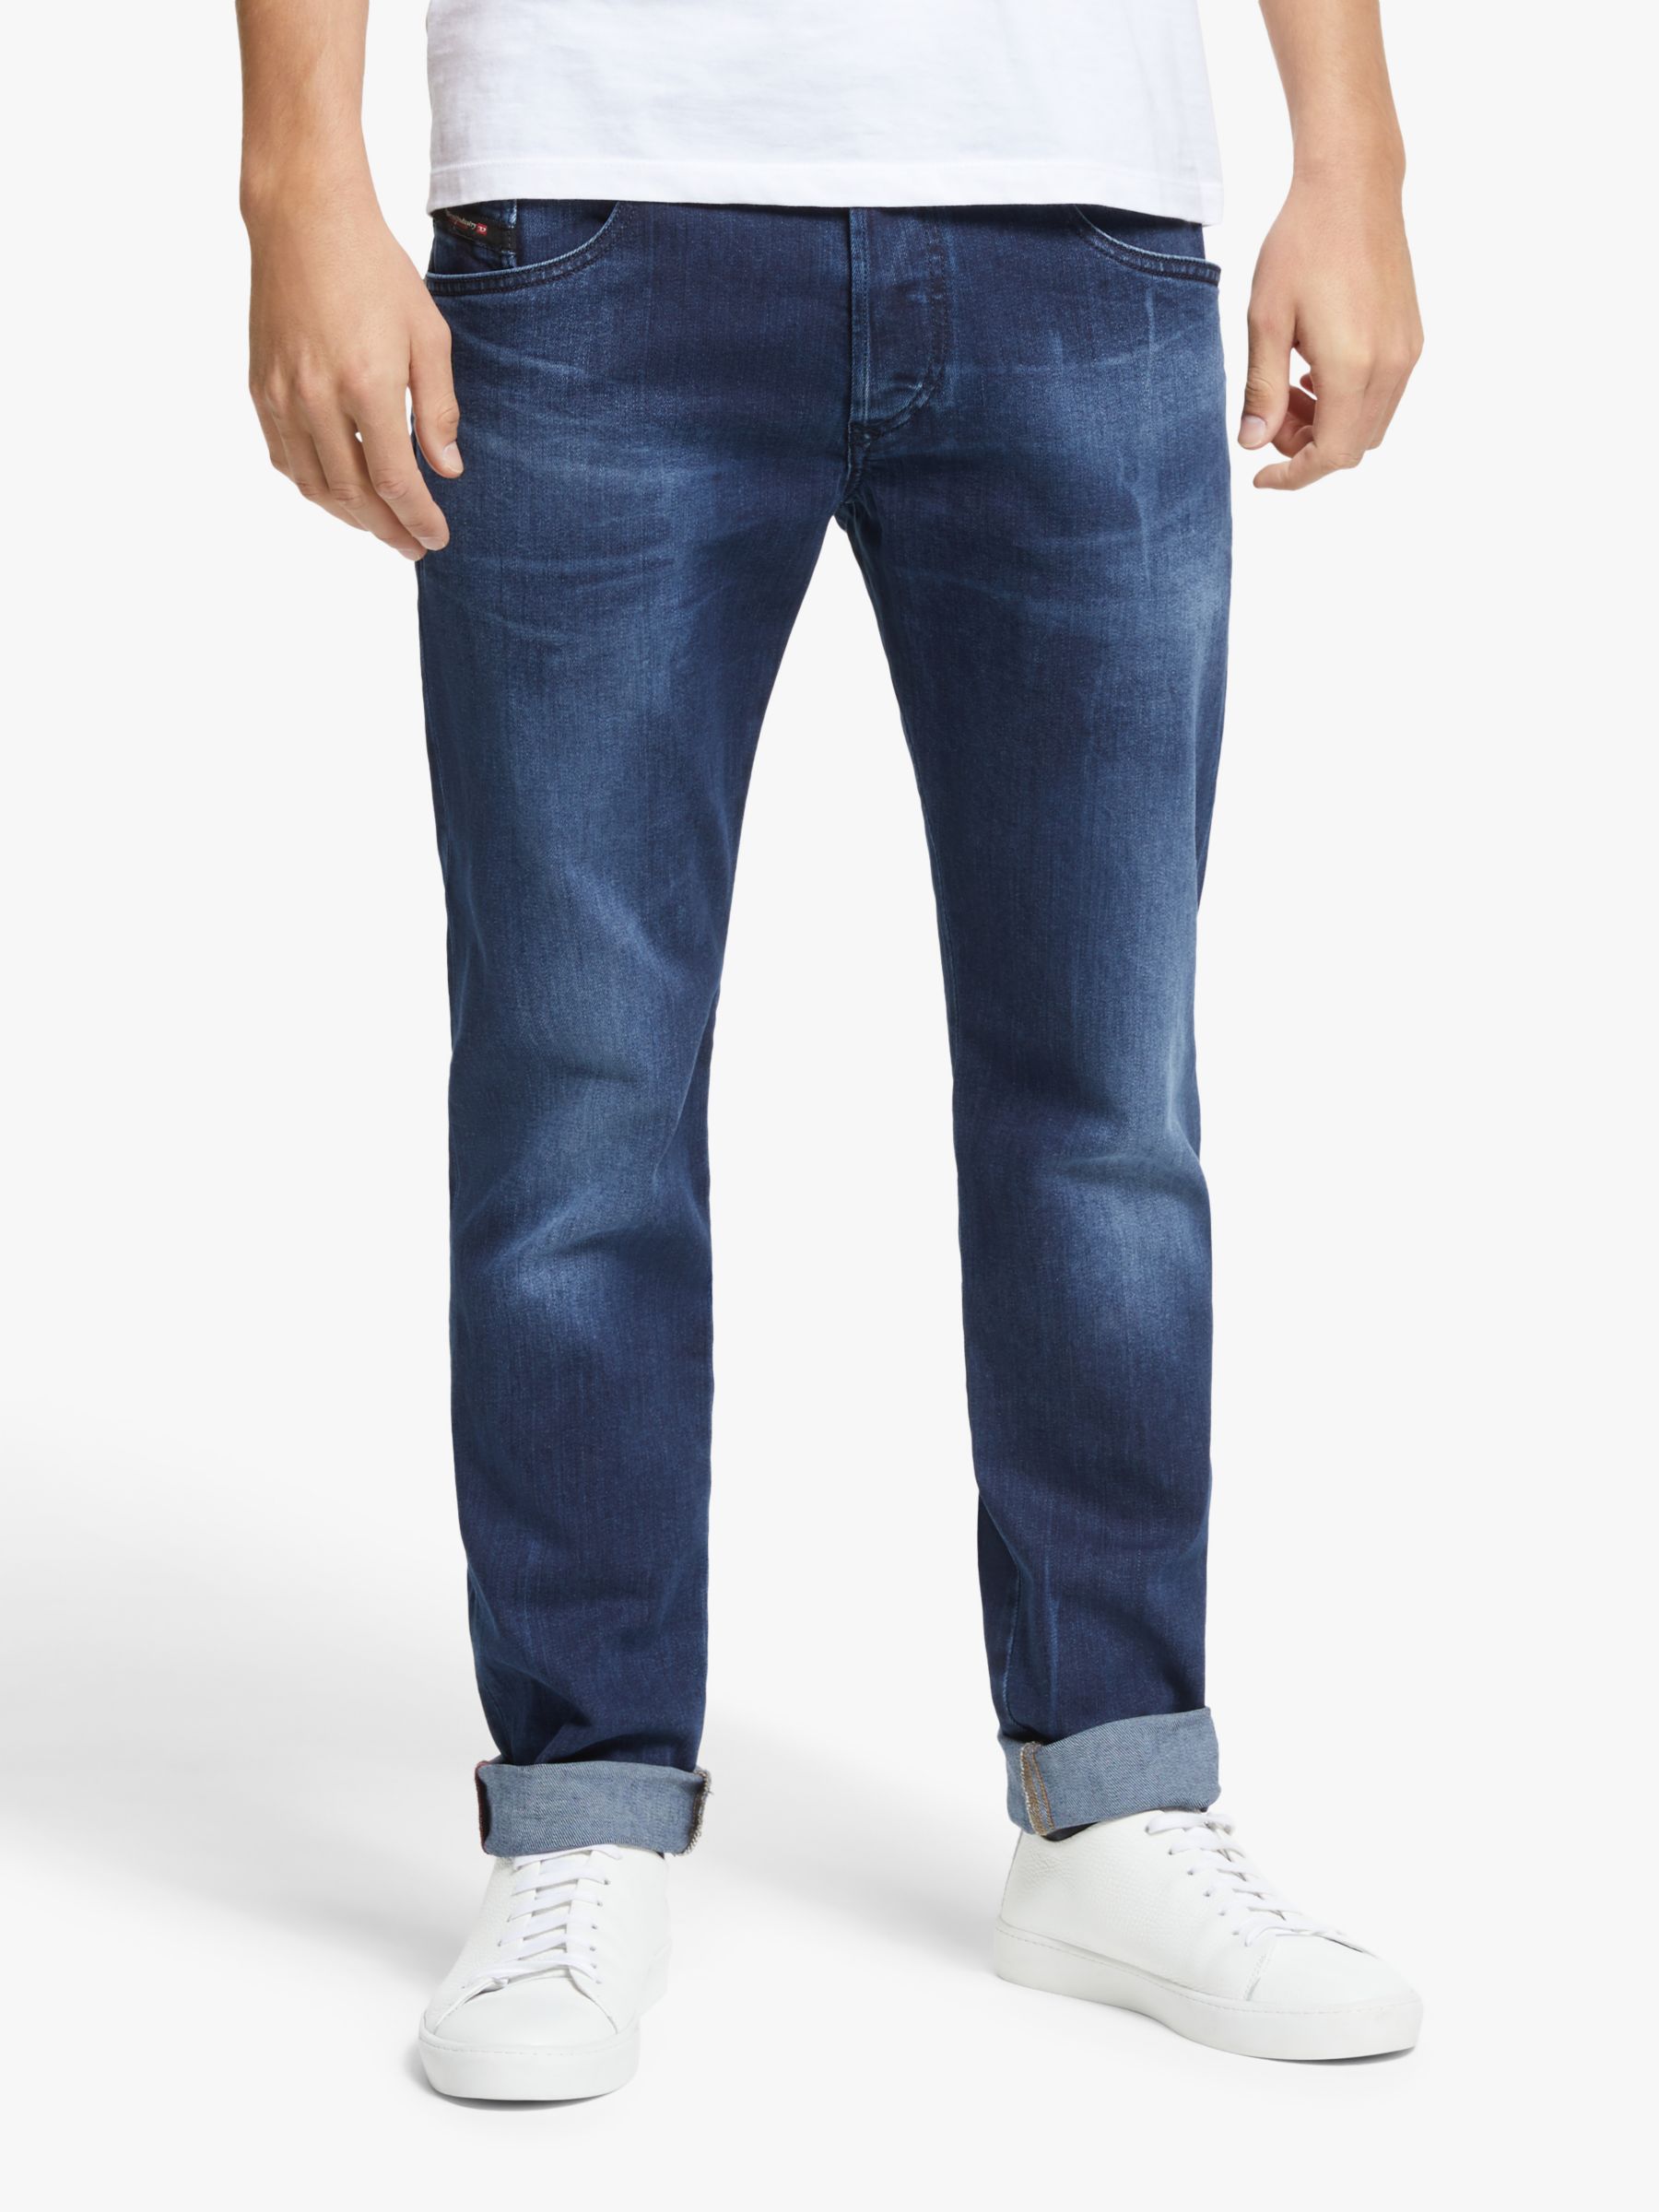 mens dark blue tapered jeans